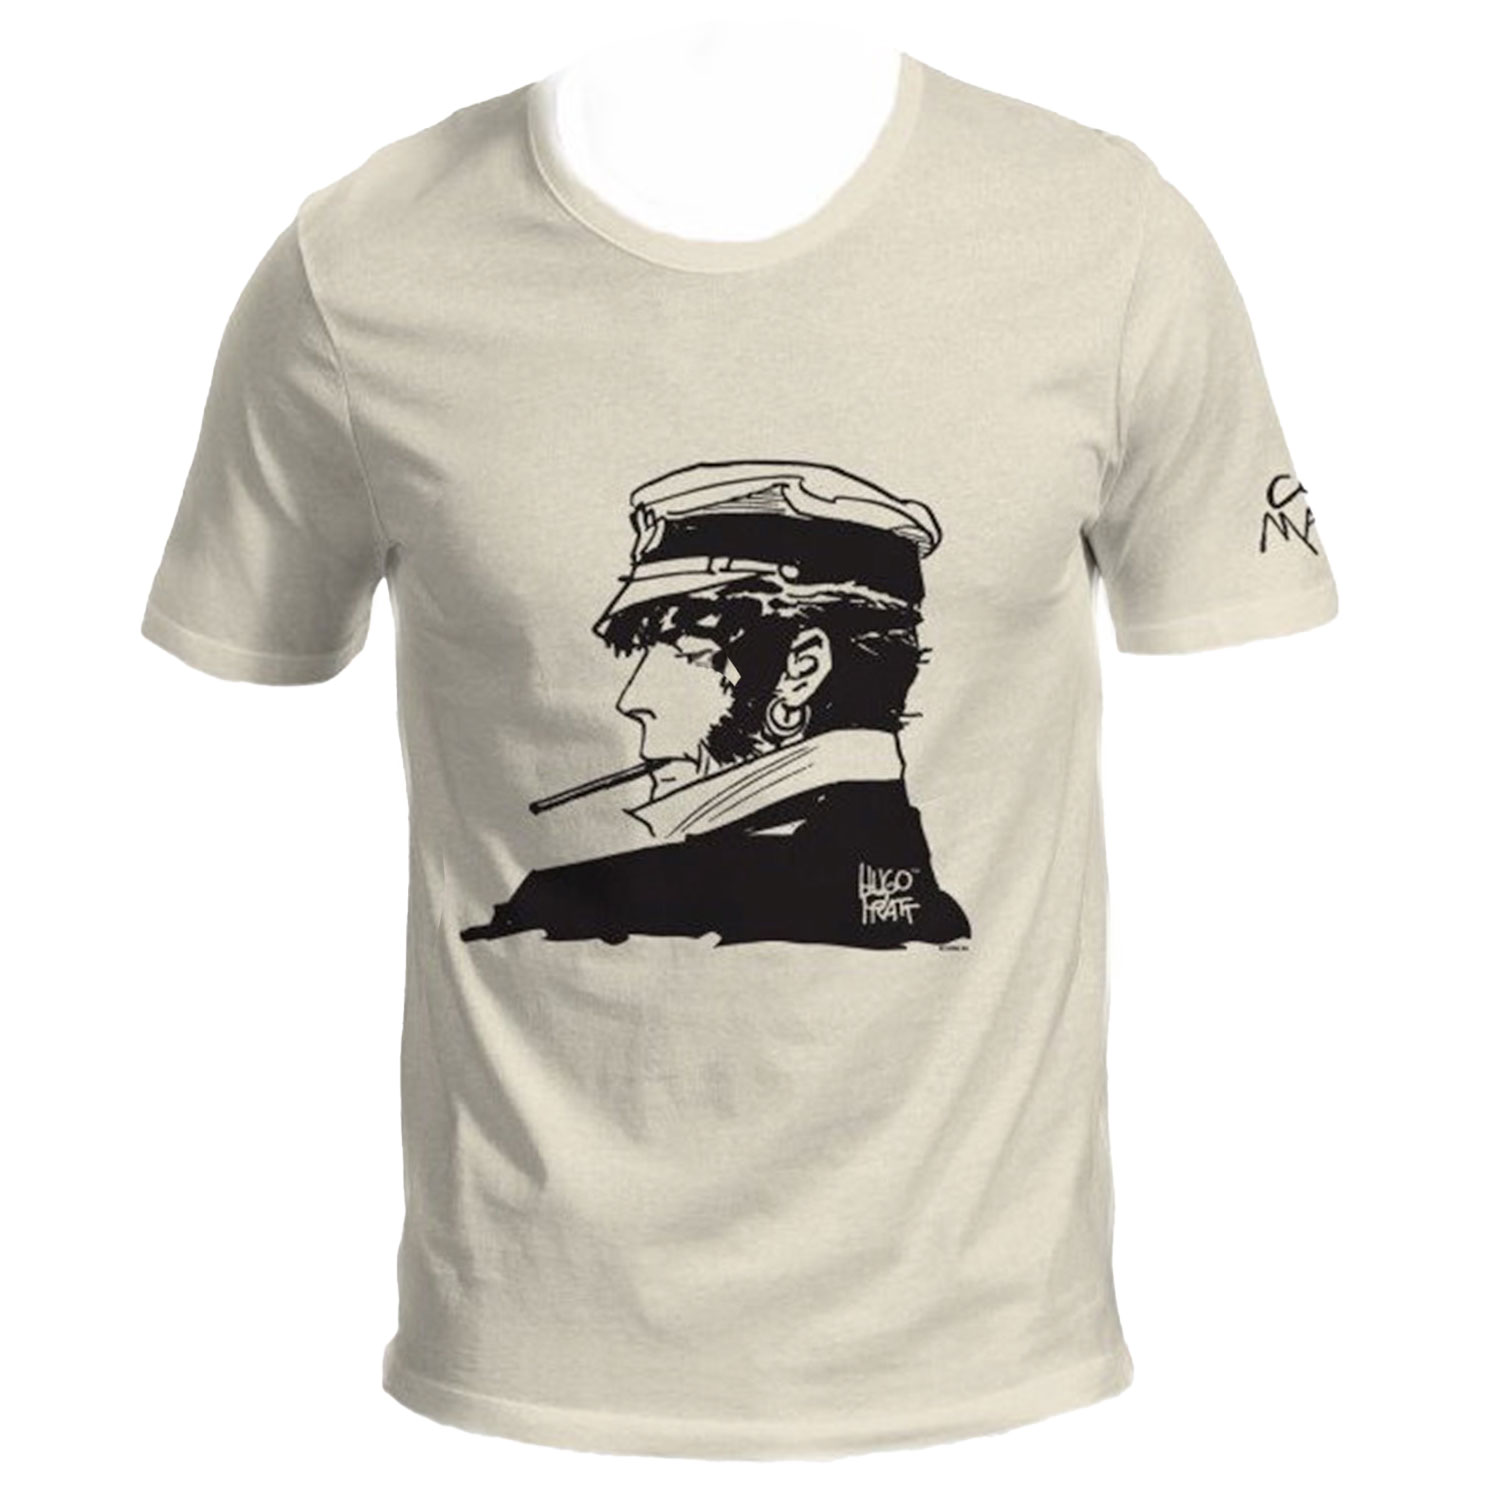 T-shirt Hugo Pratt :  Corto Maltese , Cigarette - Ecru - Taille XL